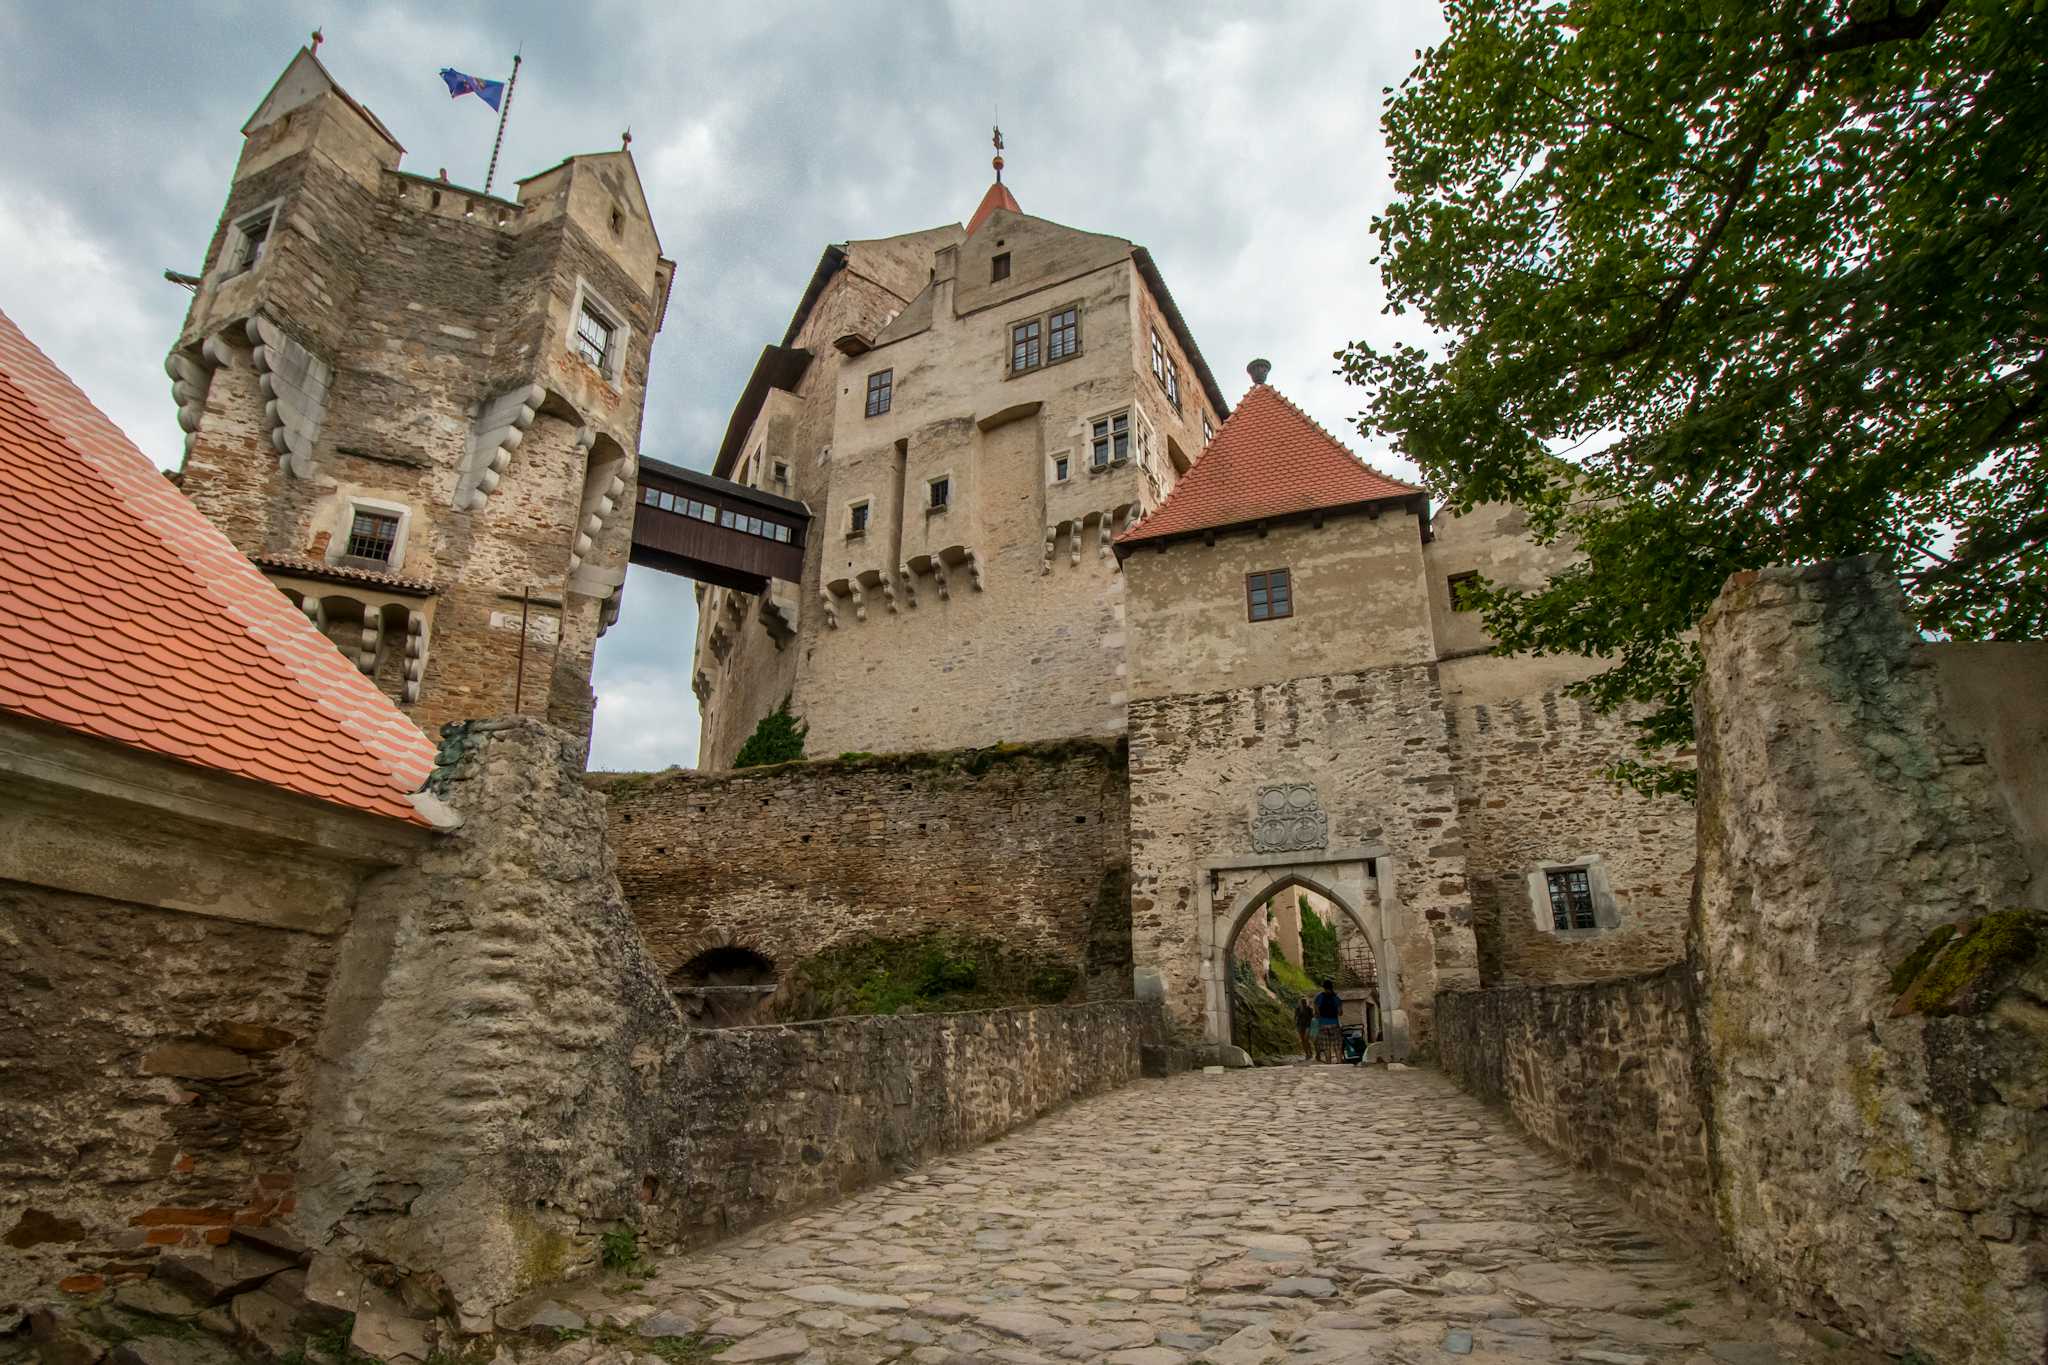 Pernstejn castle